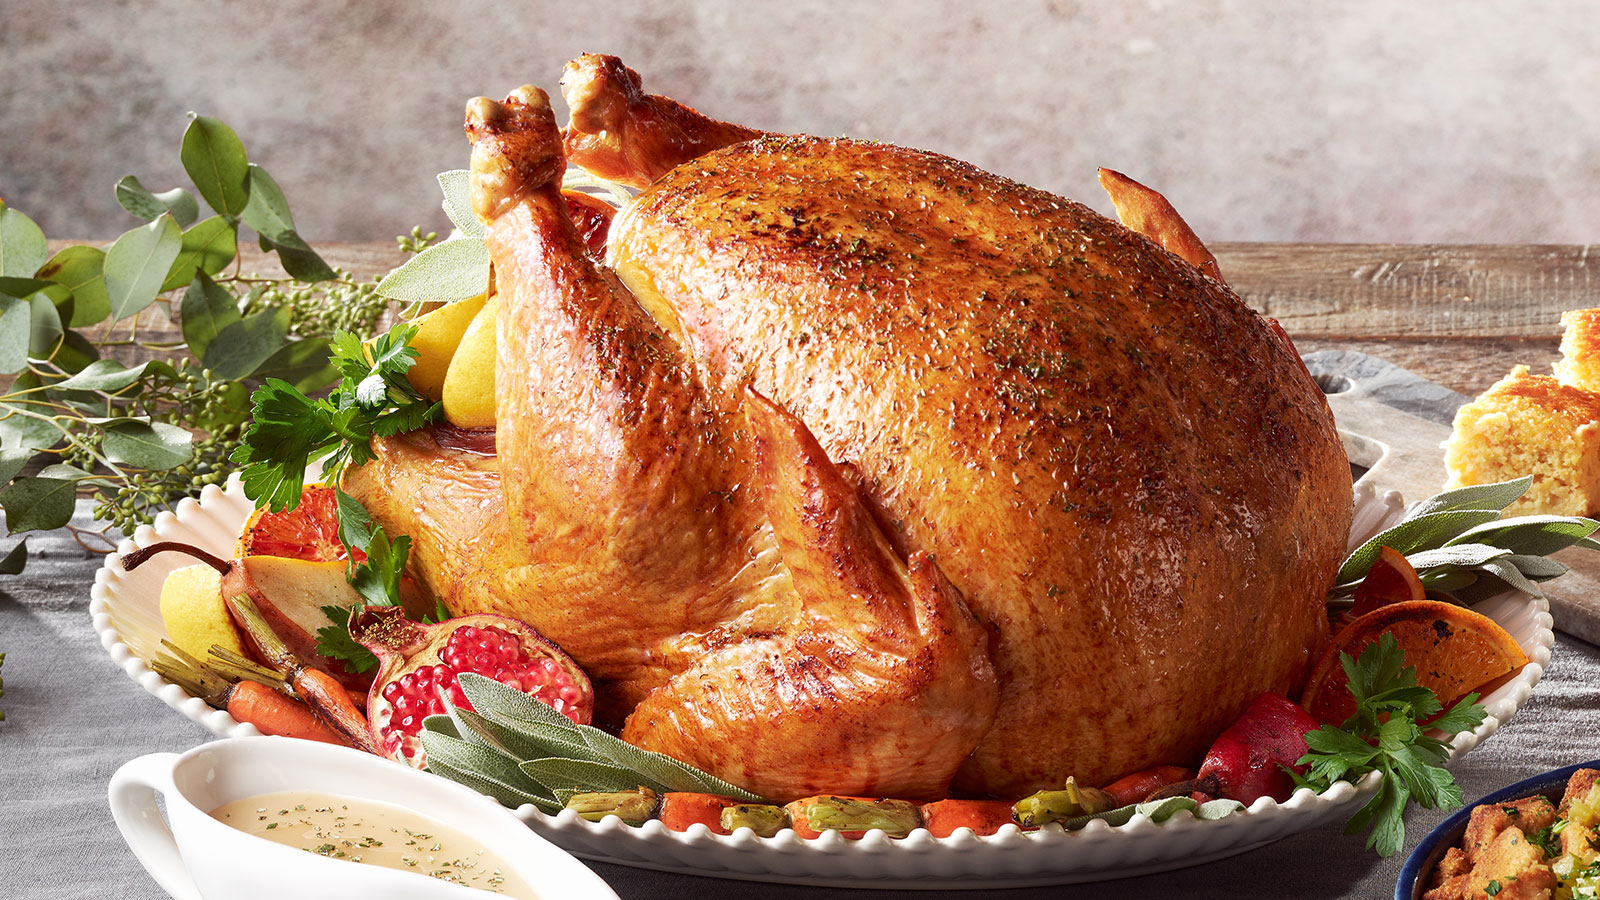 Classic Roasted Turkey Recipe The Fresh Market The Fresh Market